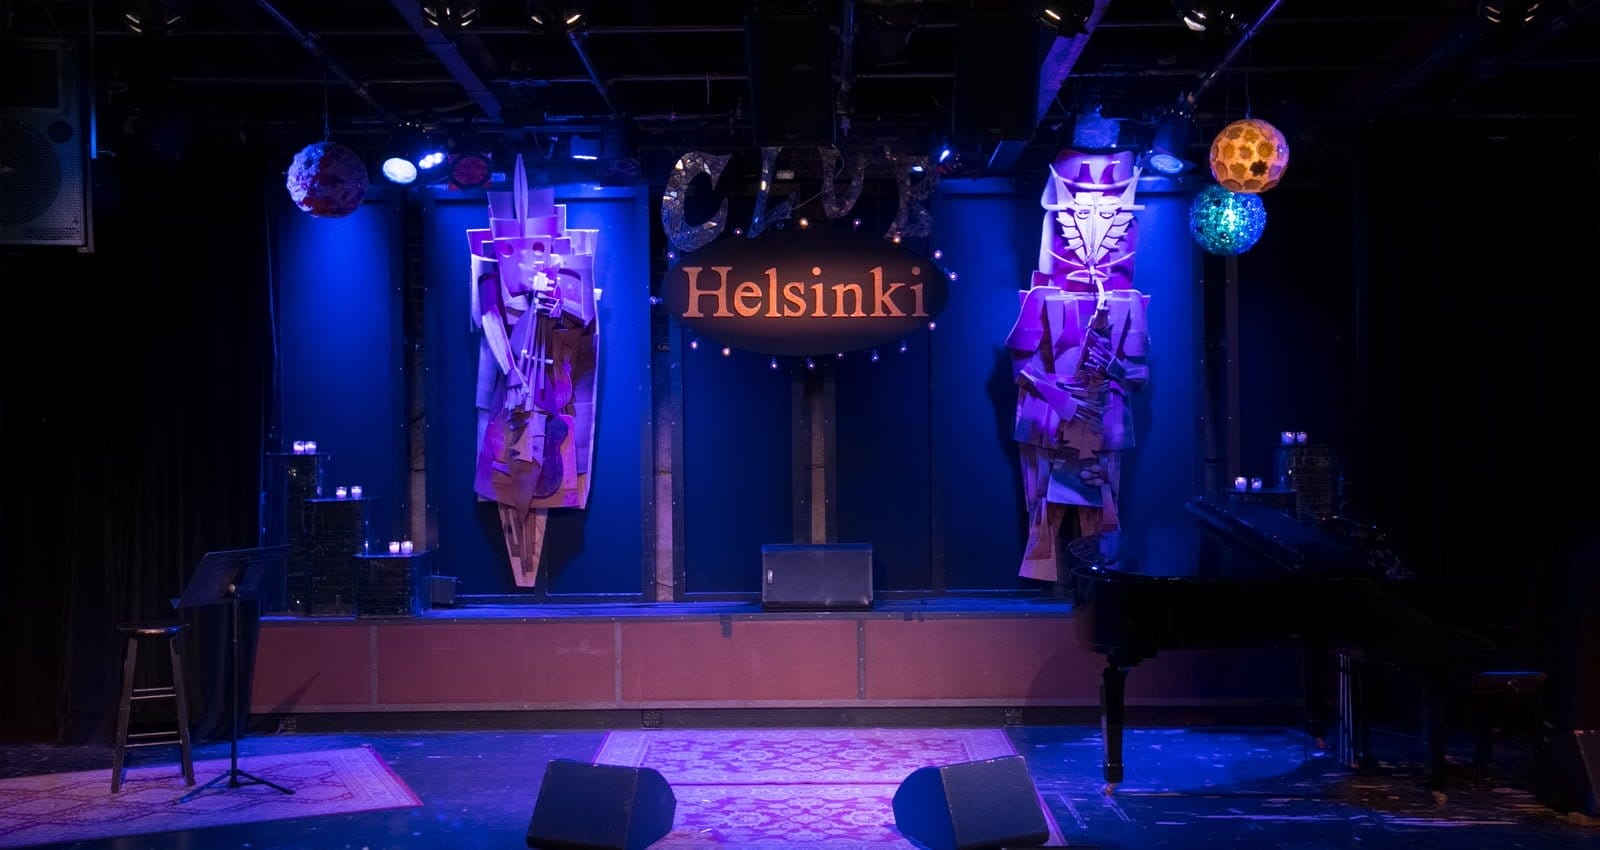 Helsinki Hudson Restaurant and Venue New York by Rail